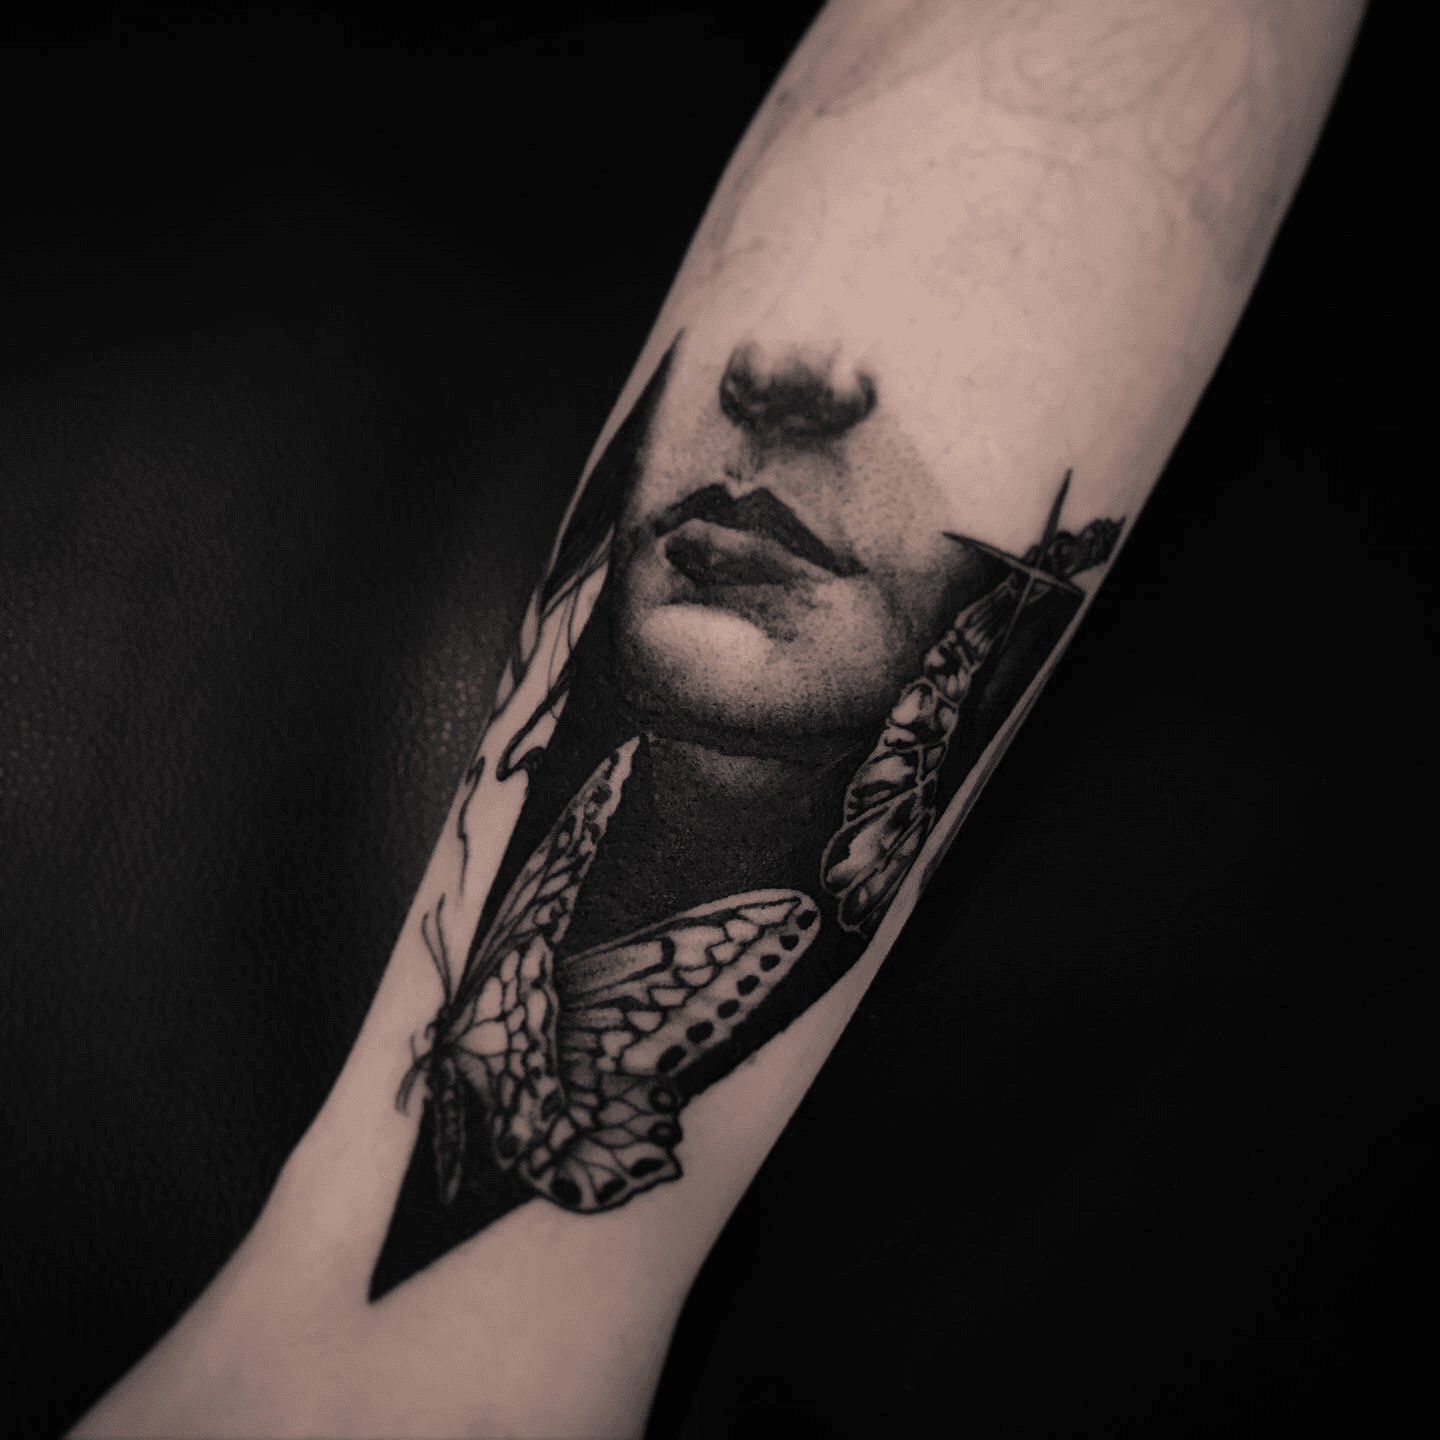 Tatuaje de Rick Schenk #RickSchenk #illustrative #black grey #portrait #lips #butterfly